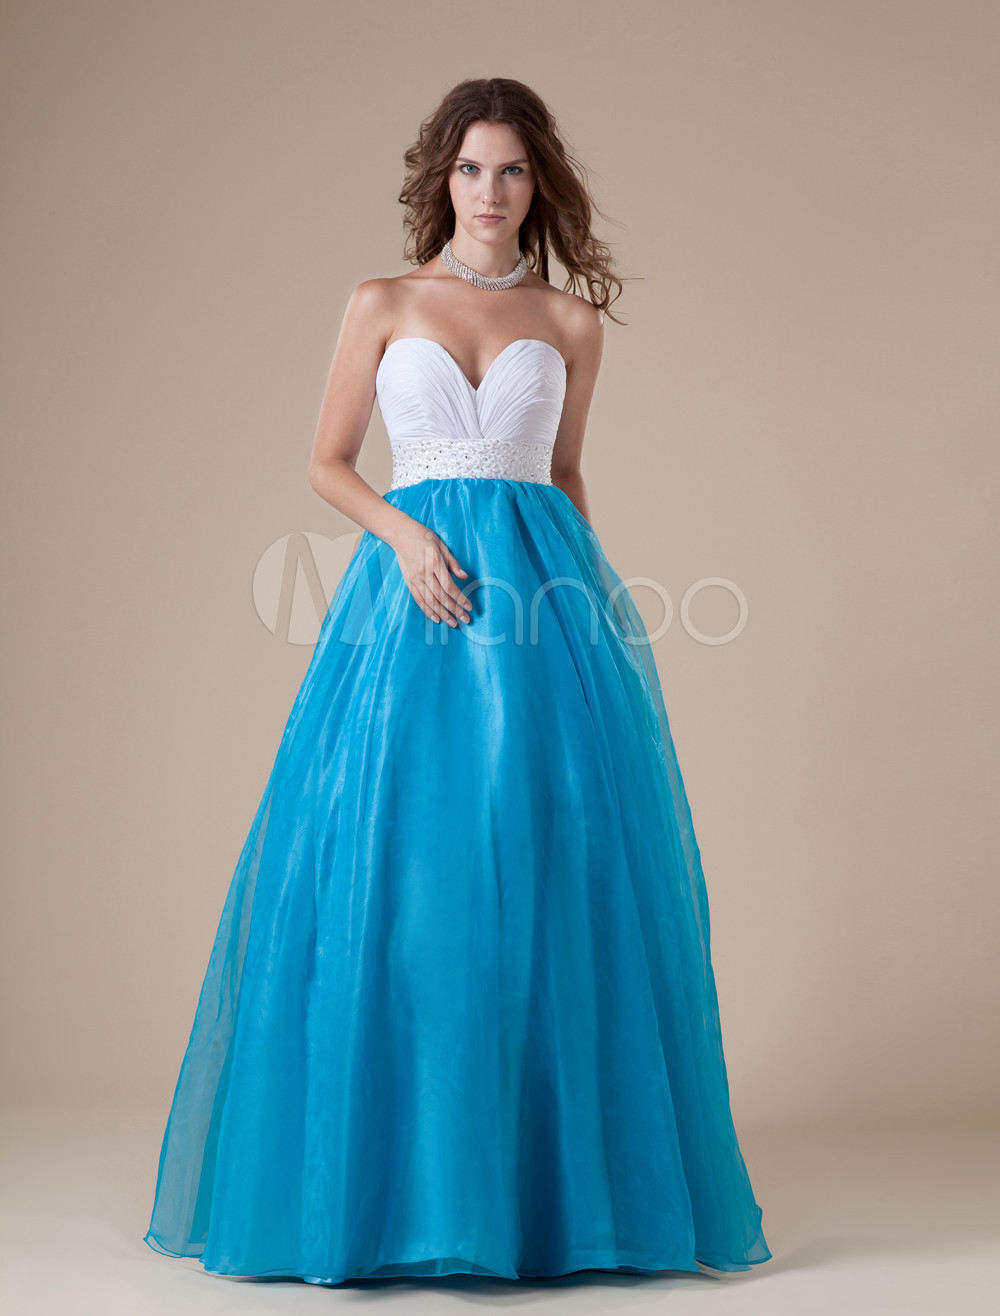 Blue Sweetheart Beading Organza Woman's Prom Dress (Wedding Prom Dresses) photo